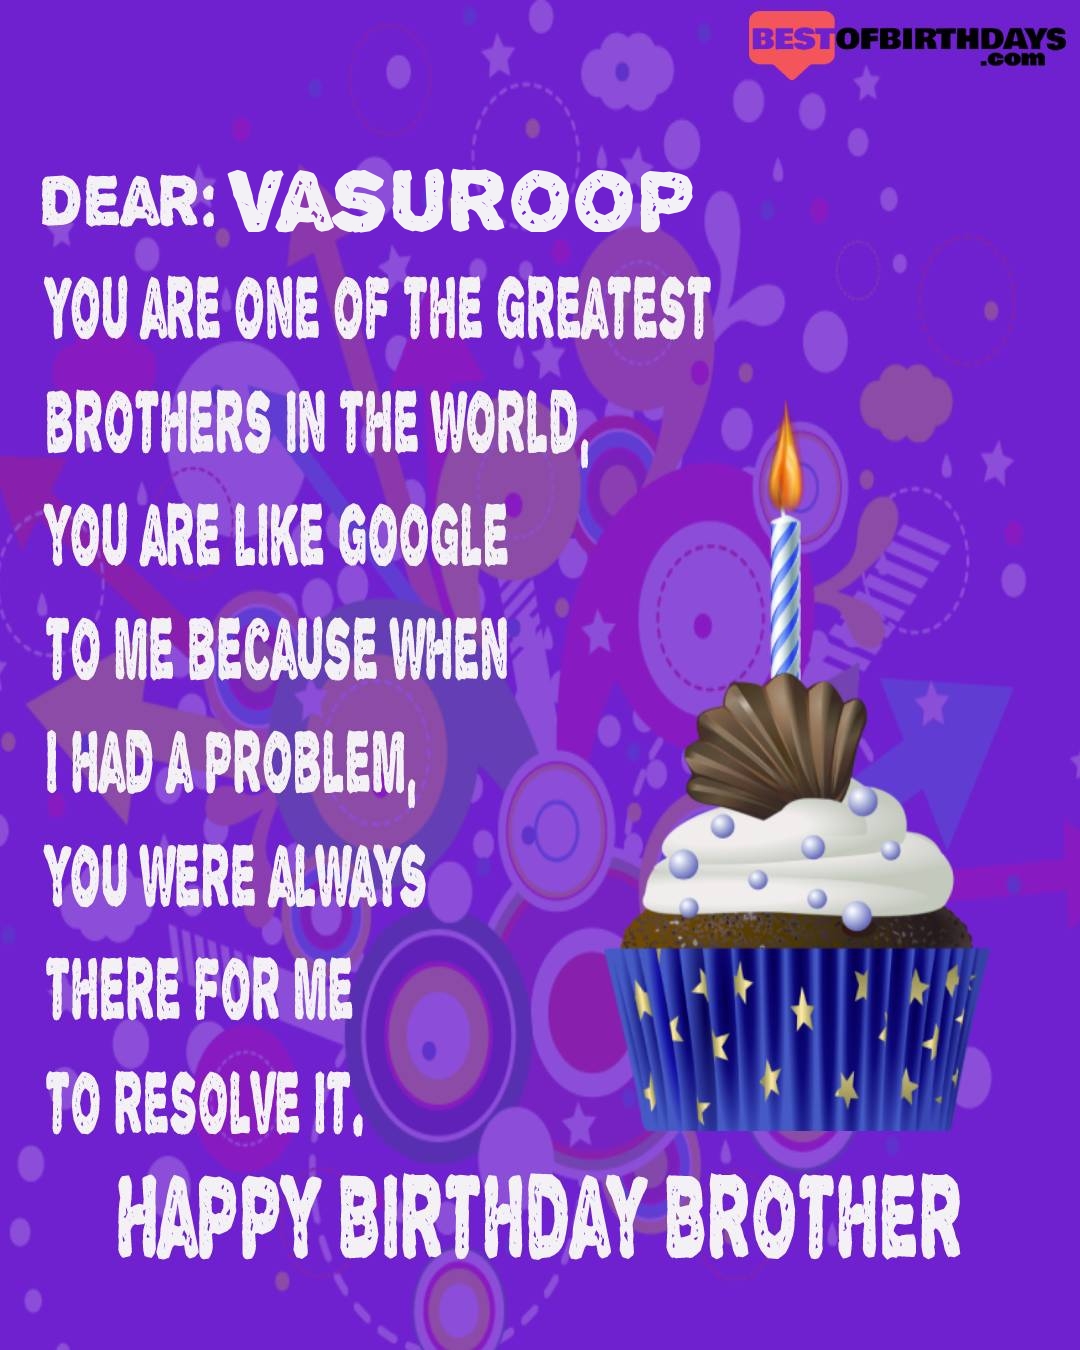 Happy birthday vasuroop bhai brother bro